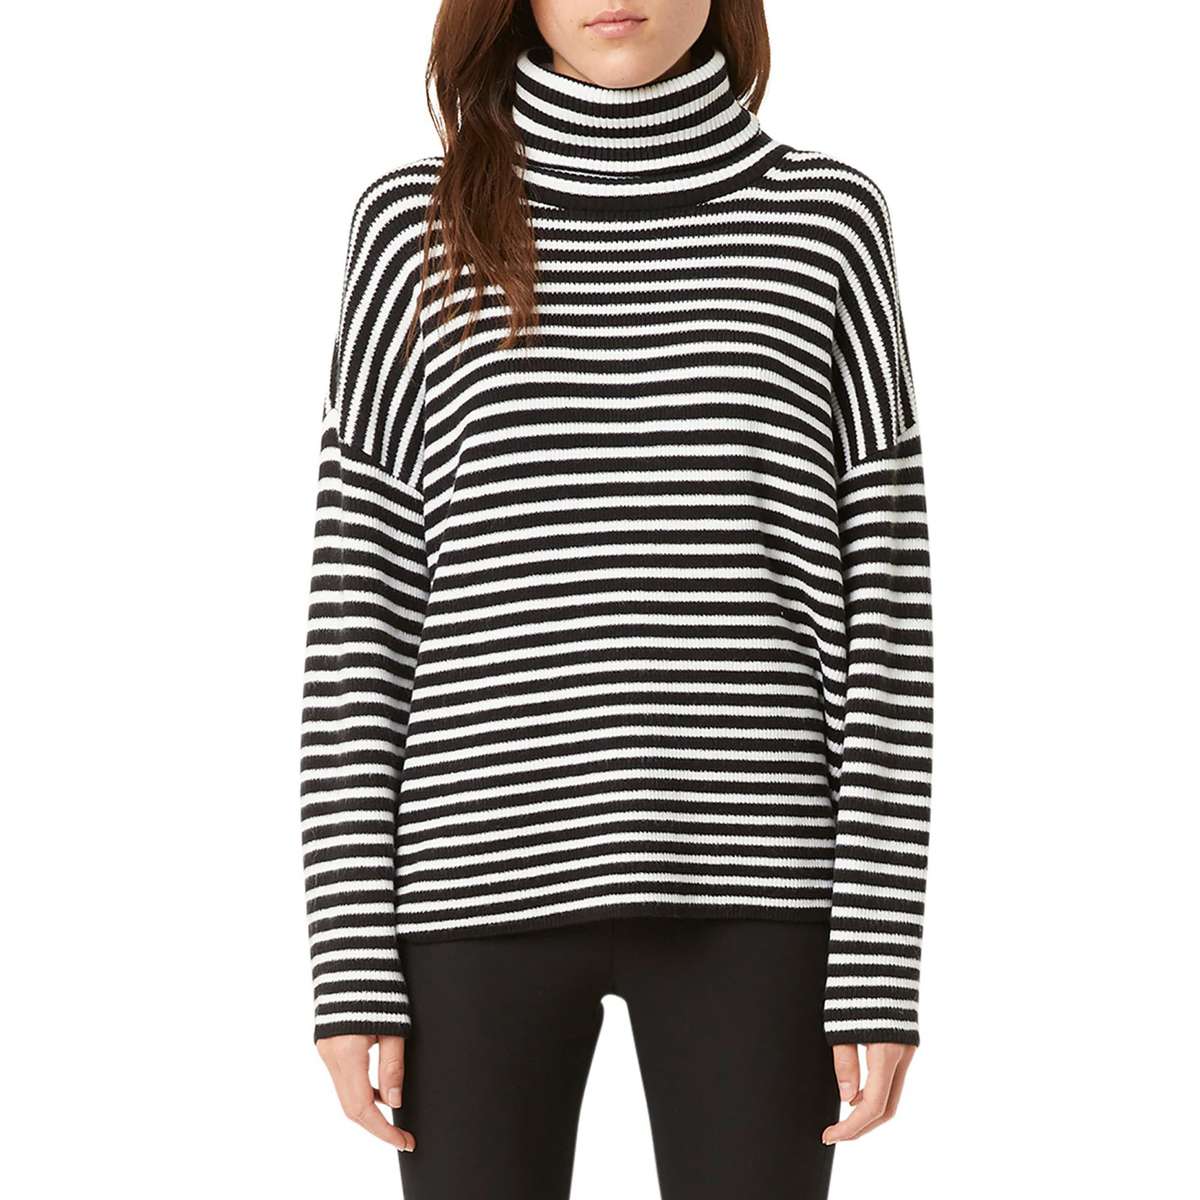 Katie Holmes's Striped Khaite Sweater Is a Wardrobe Staple | InStyle